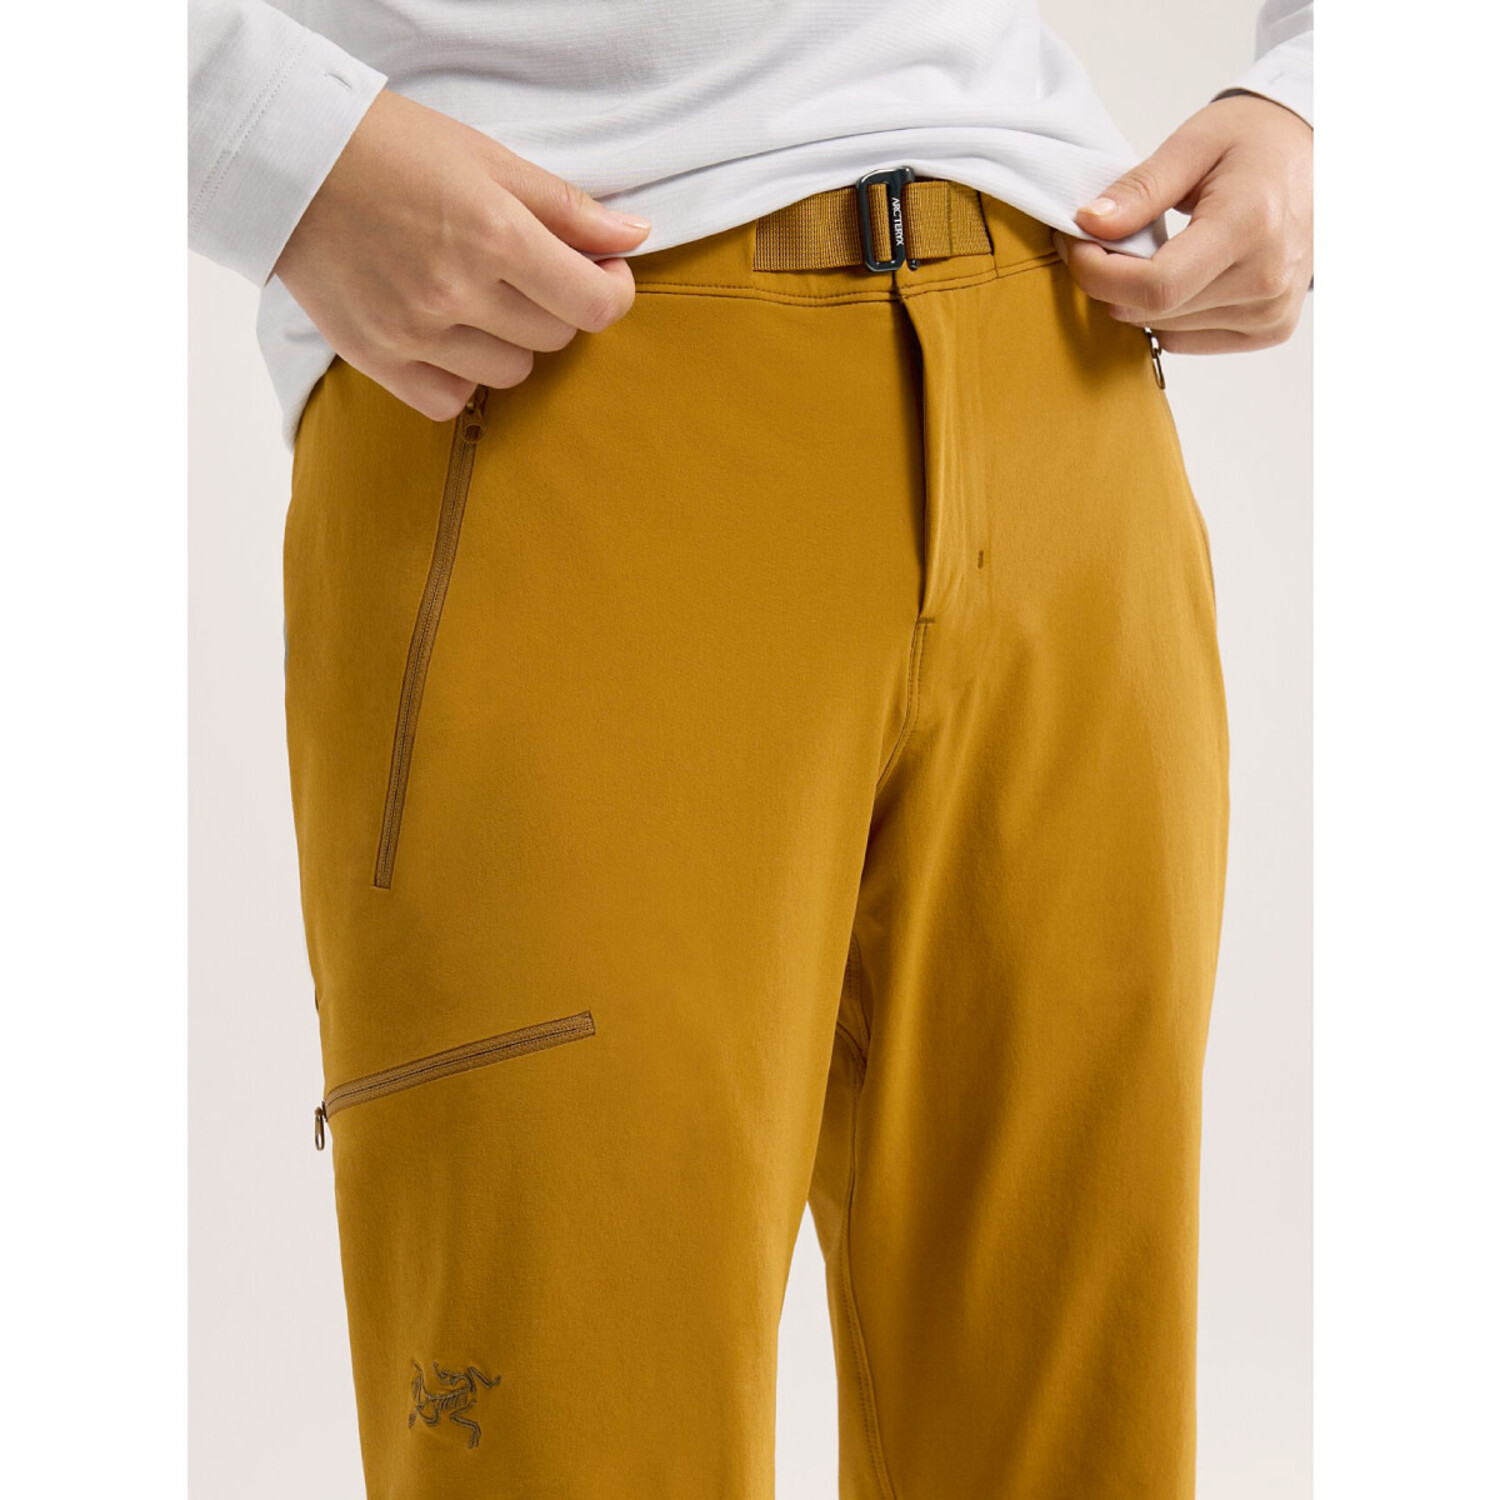 Womens New Arcteryx Gamma LT Pants Size Medium Color Smoked Lilac 2016  Model